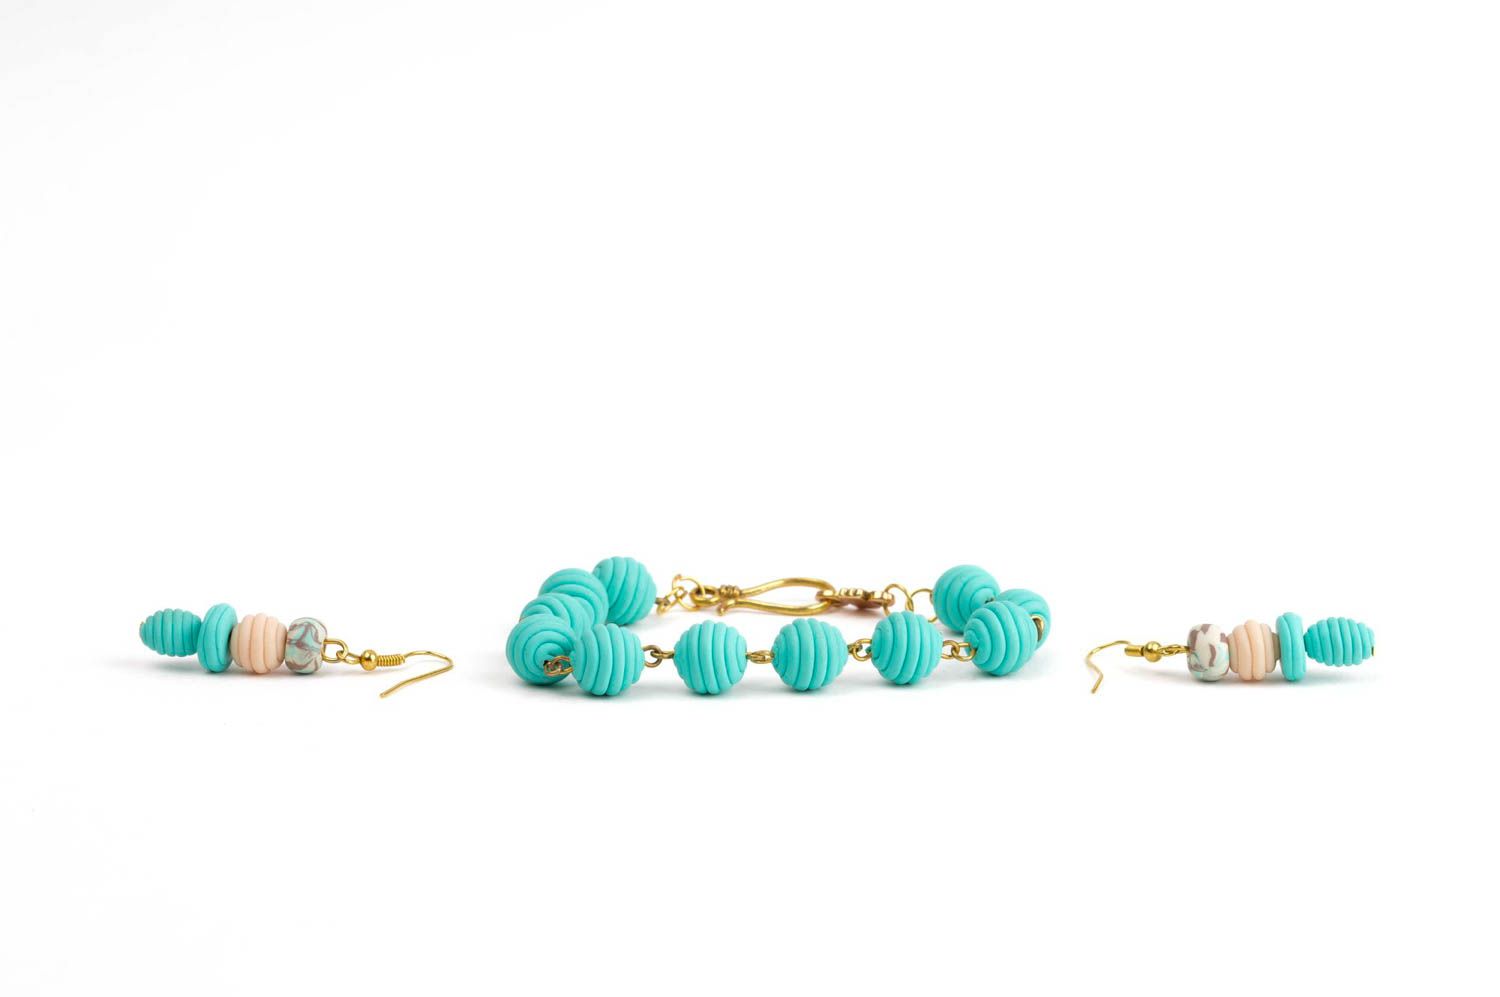 Handmade earrings designer bracelet clay jewelry set gift for her unusual gift photo 3